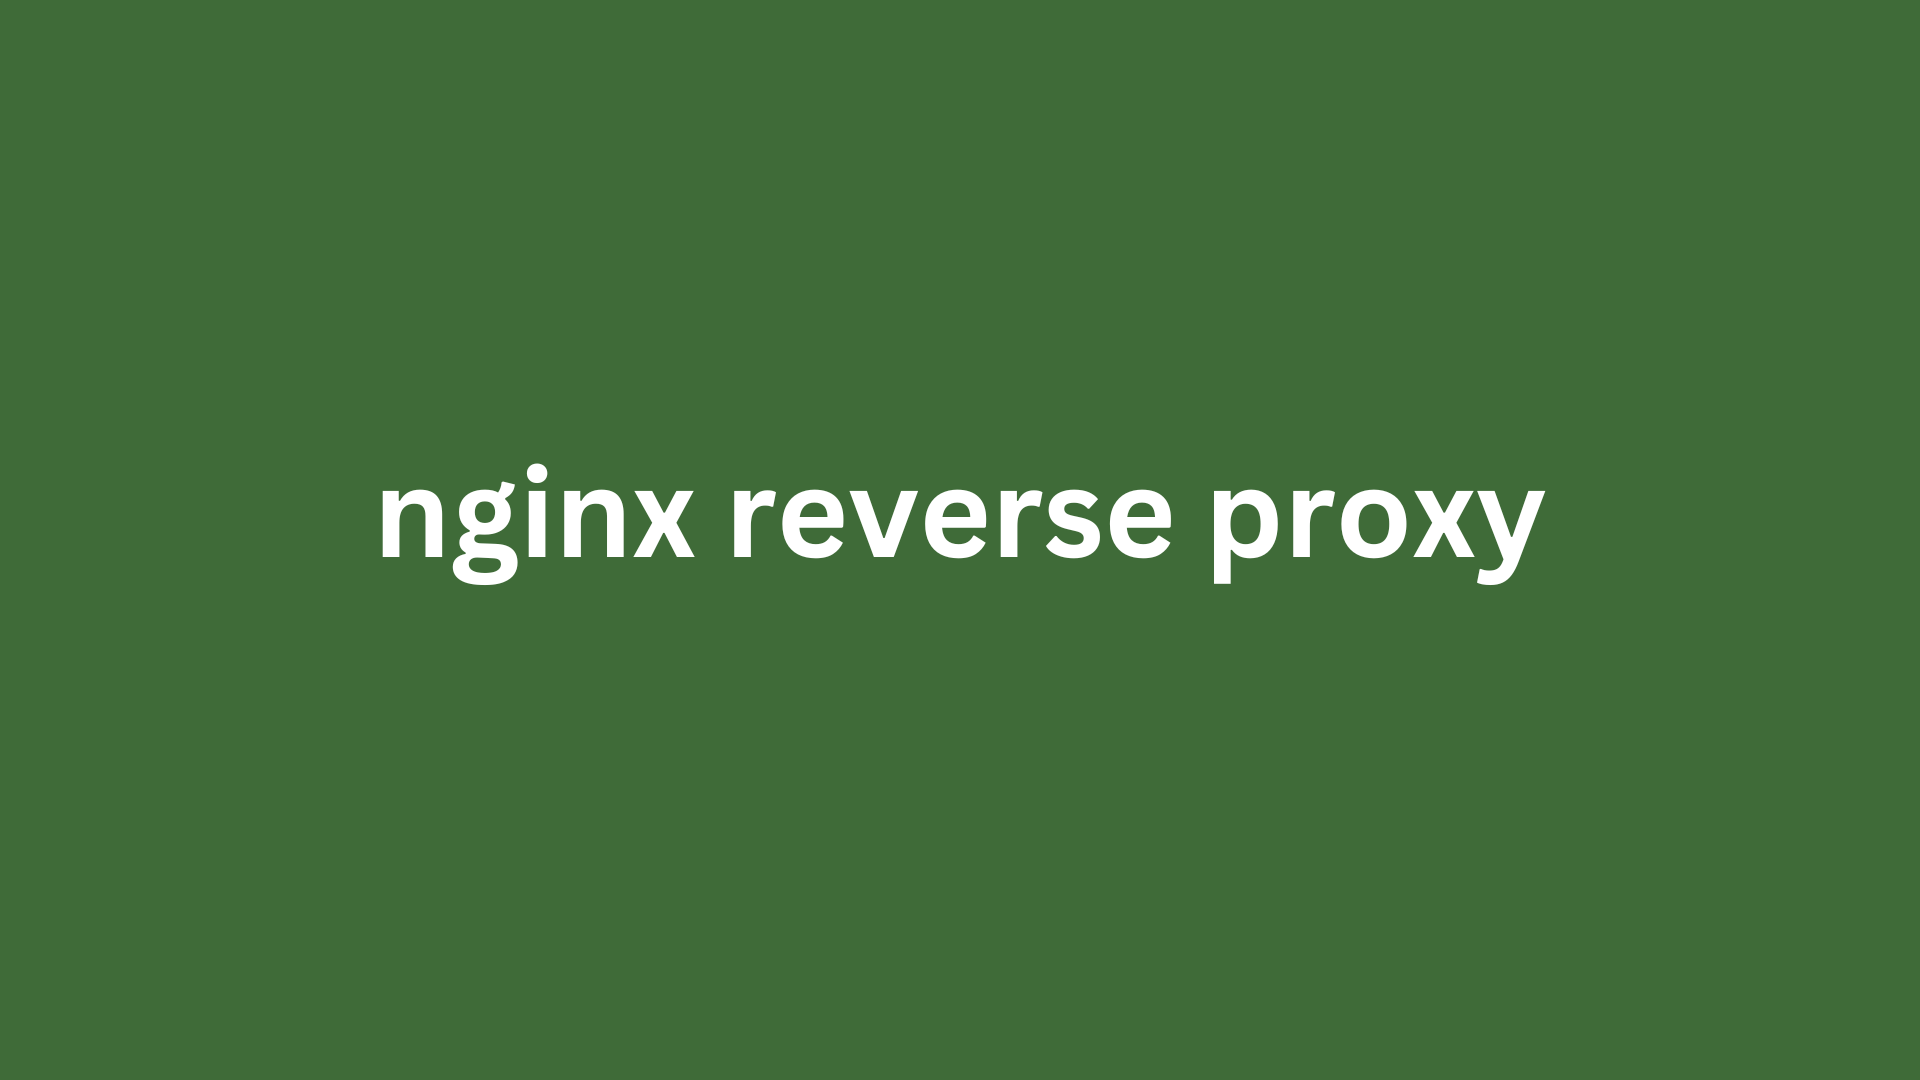 Nginx reverse proxy for django application